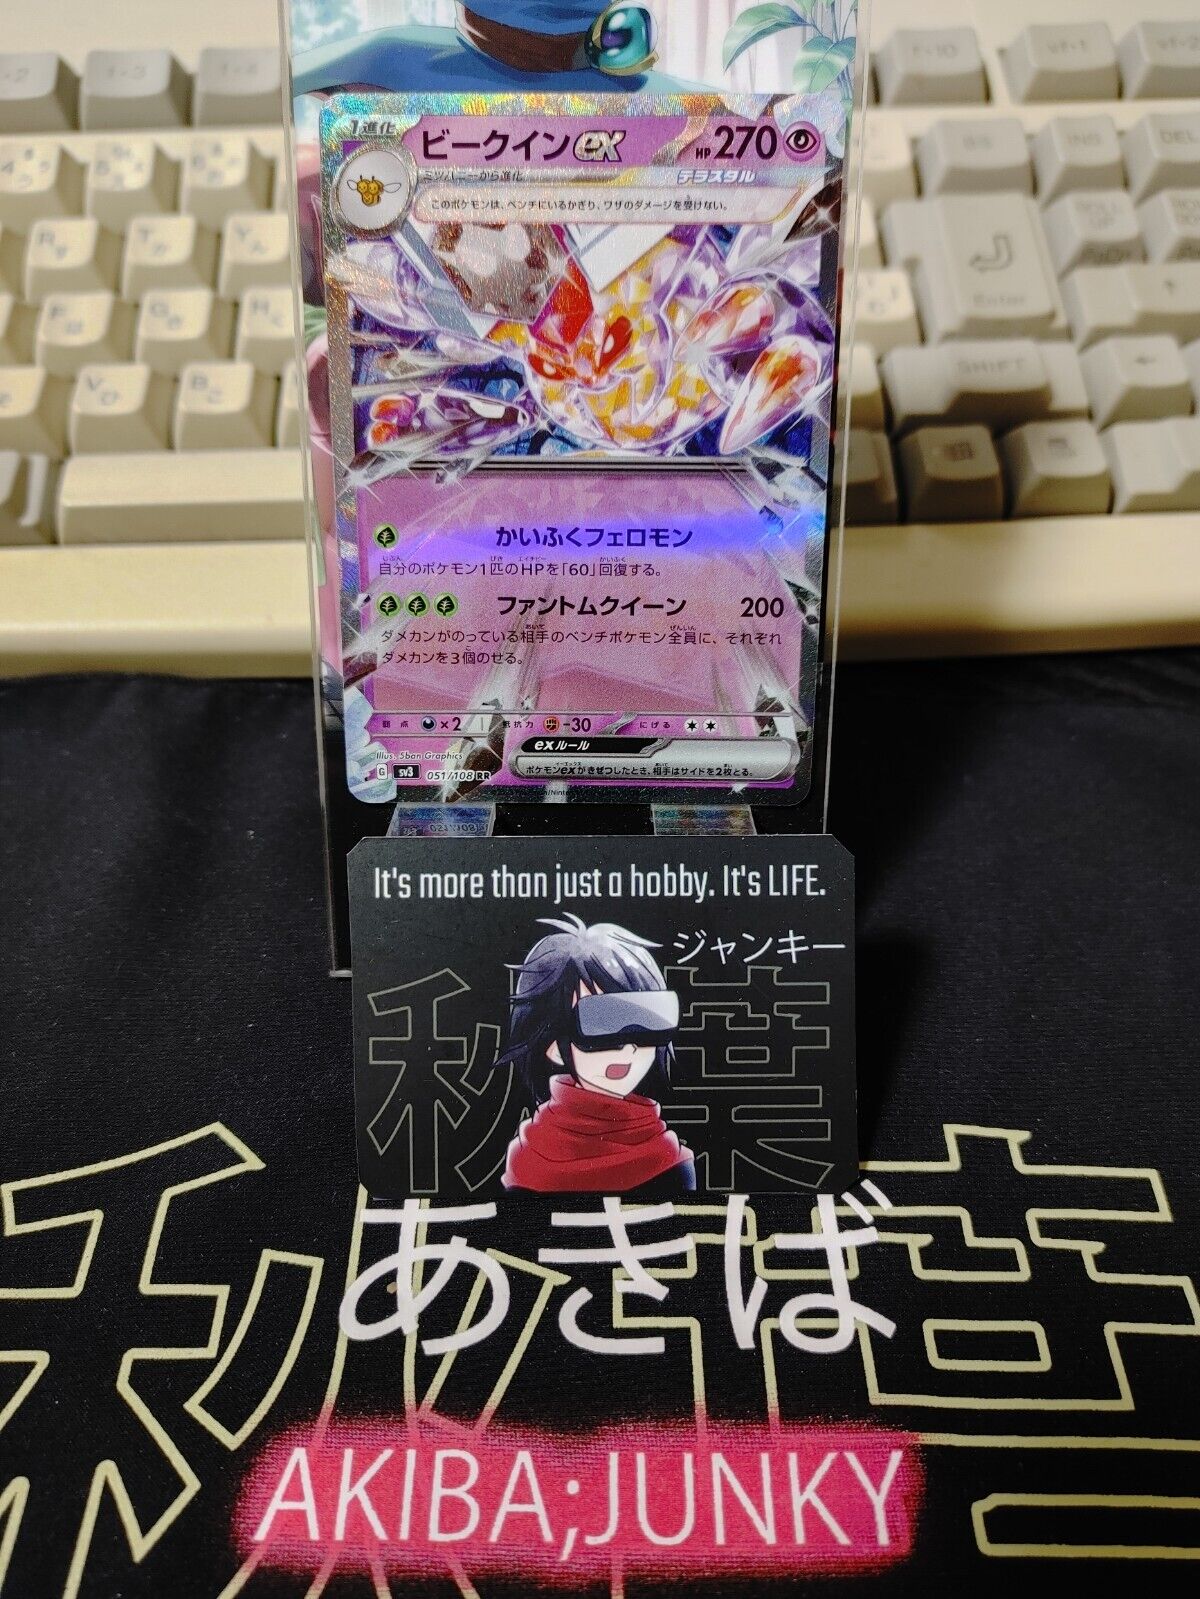 Vespiquen ex RR 051/108 Pokemon Card SV3 Obsidian Flames Japanese